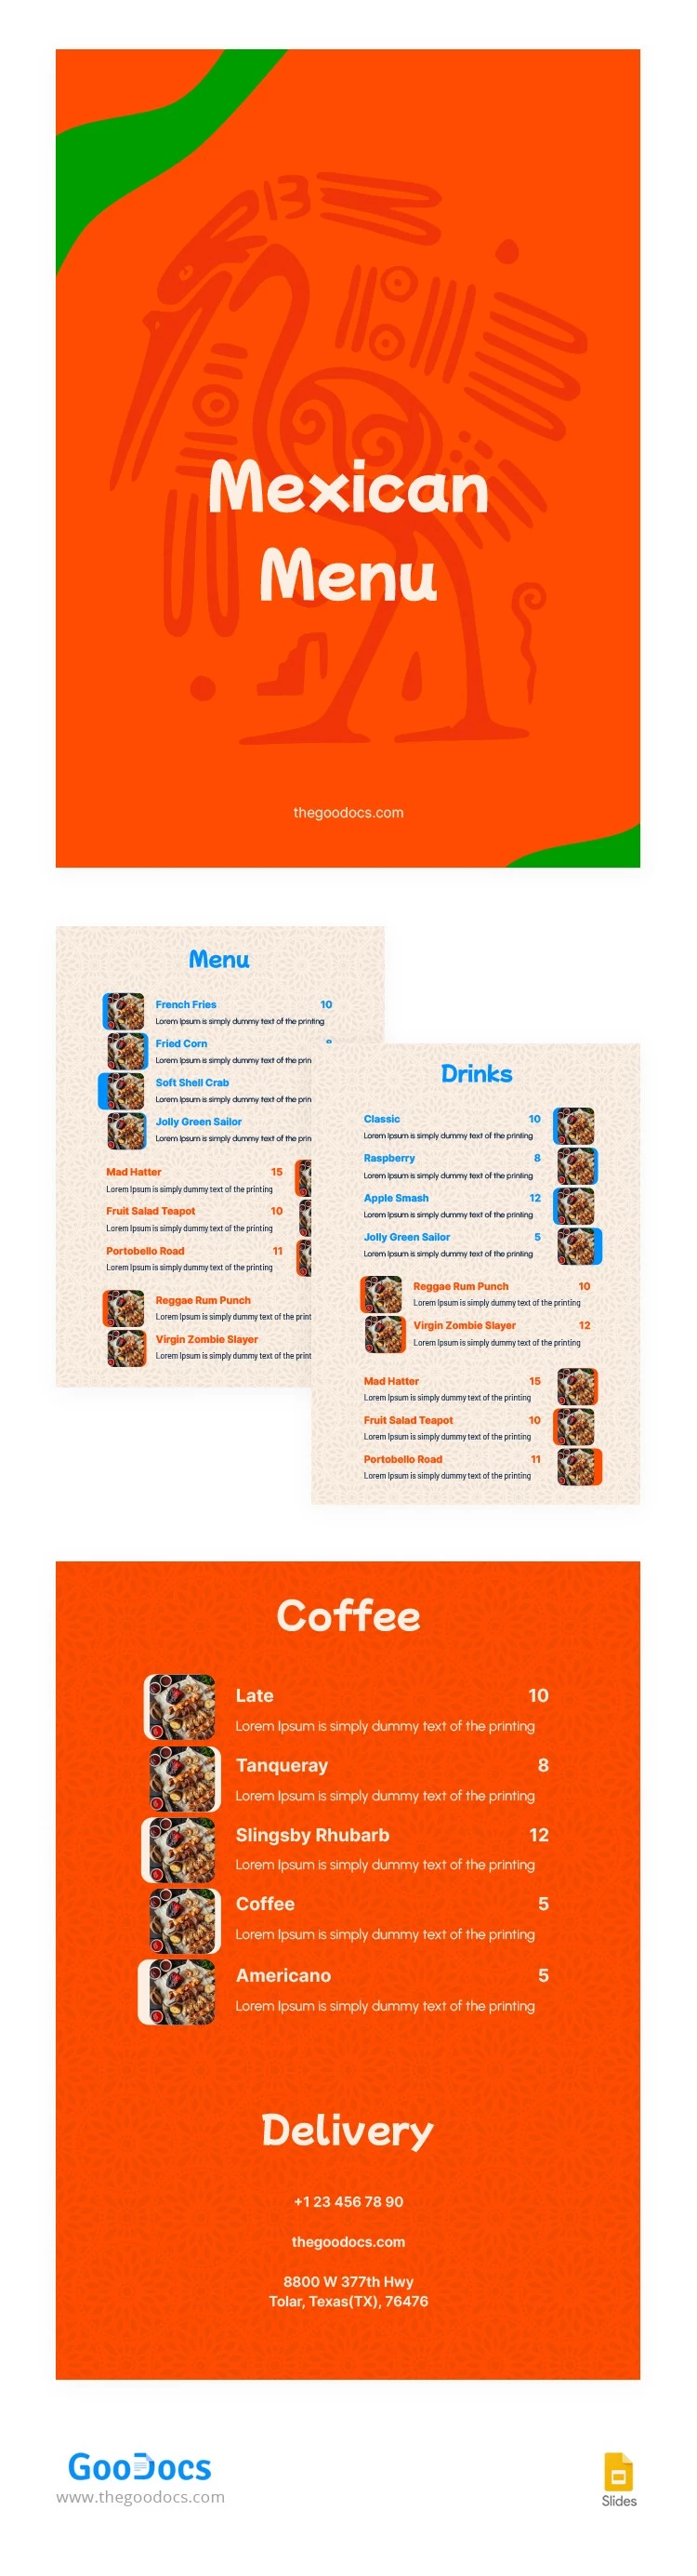 Elegante menu di ristorante messicano arancione - free Google Docs Template - 10065998